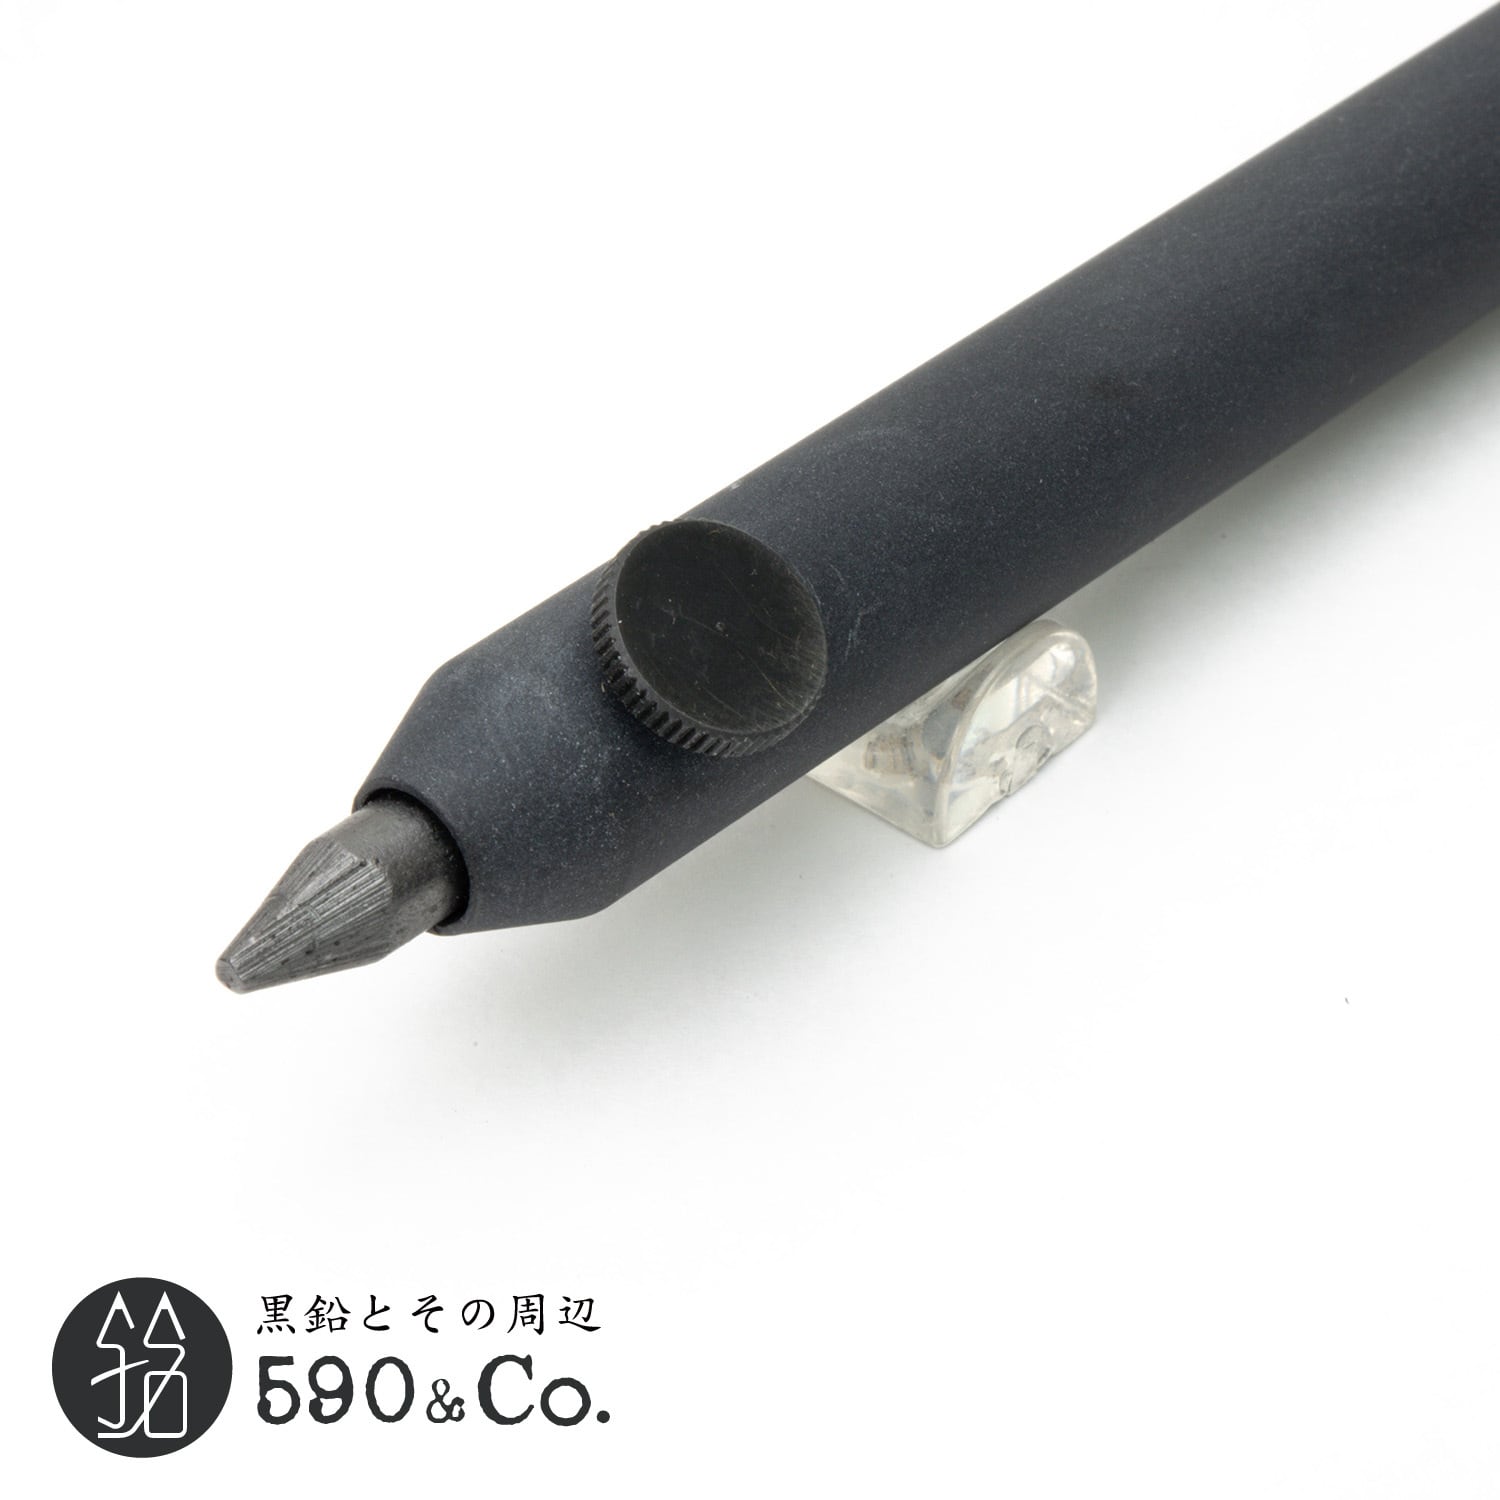 PARAFERNALIA × Internoitaliano】 Neri Mechanical Pencil 5.5ミリ芯ホルダー (ブラック)  590Co.